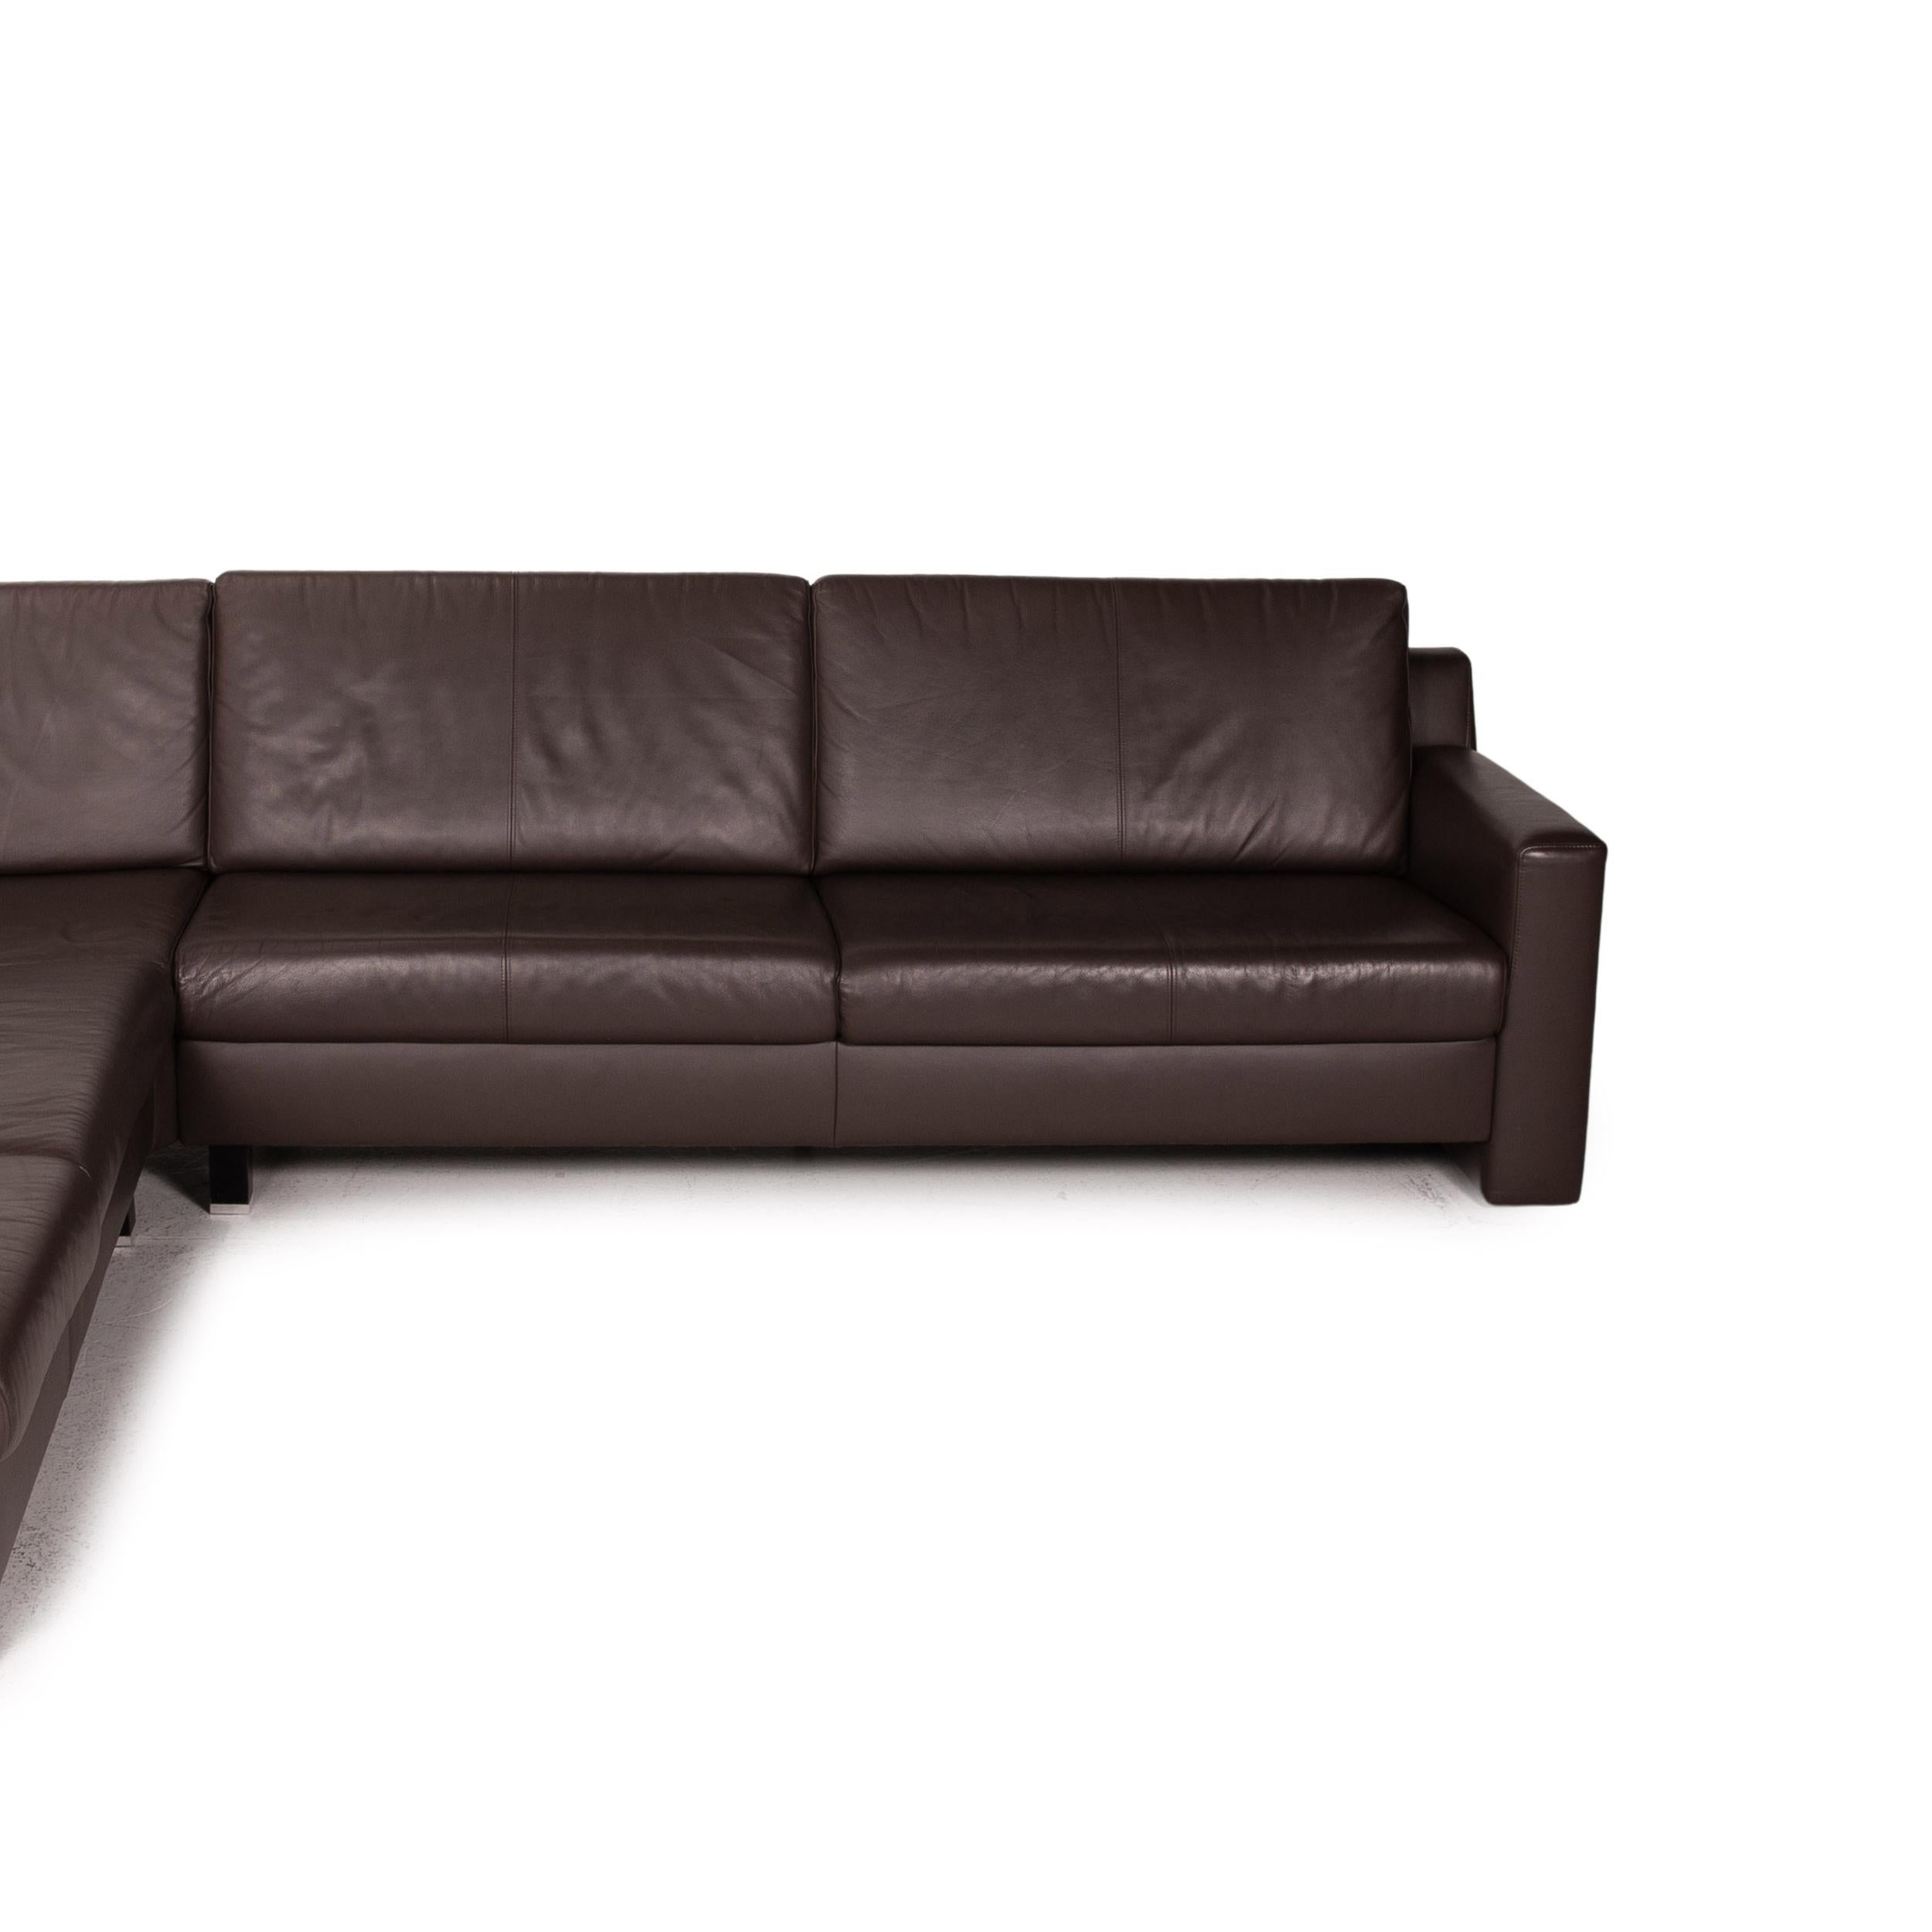 Ewald Schillig Flex Plus Leather Corner Sofa Brown Dark Brown Sofa Couch For Sale 1